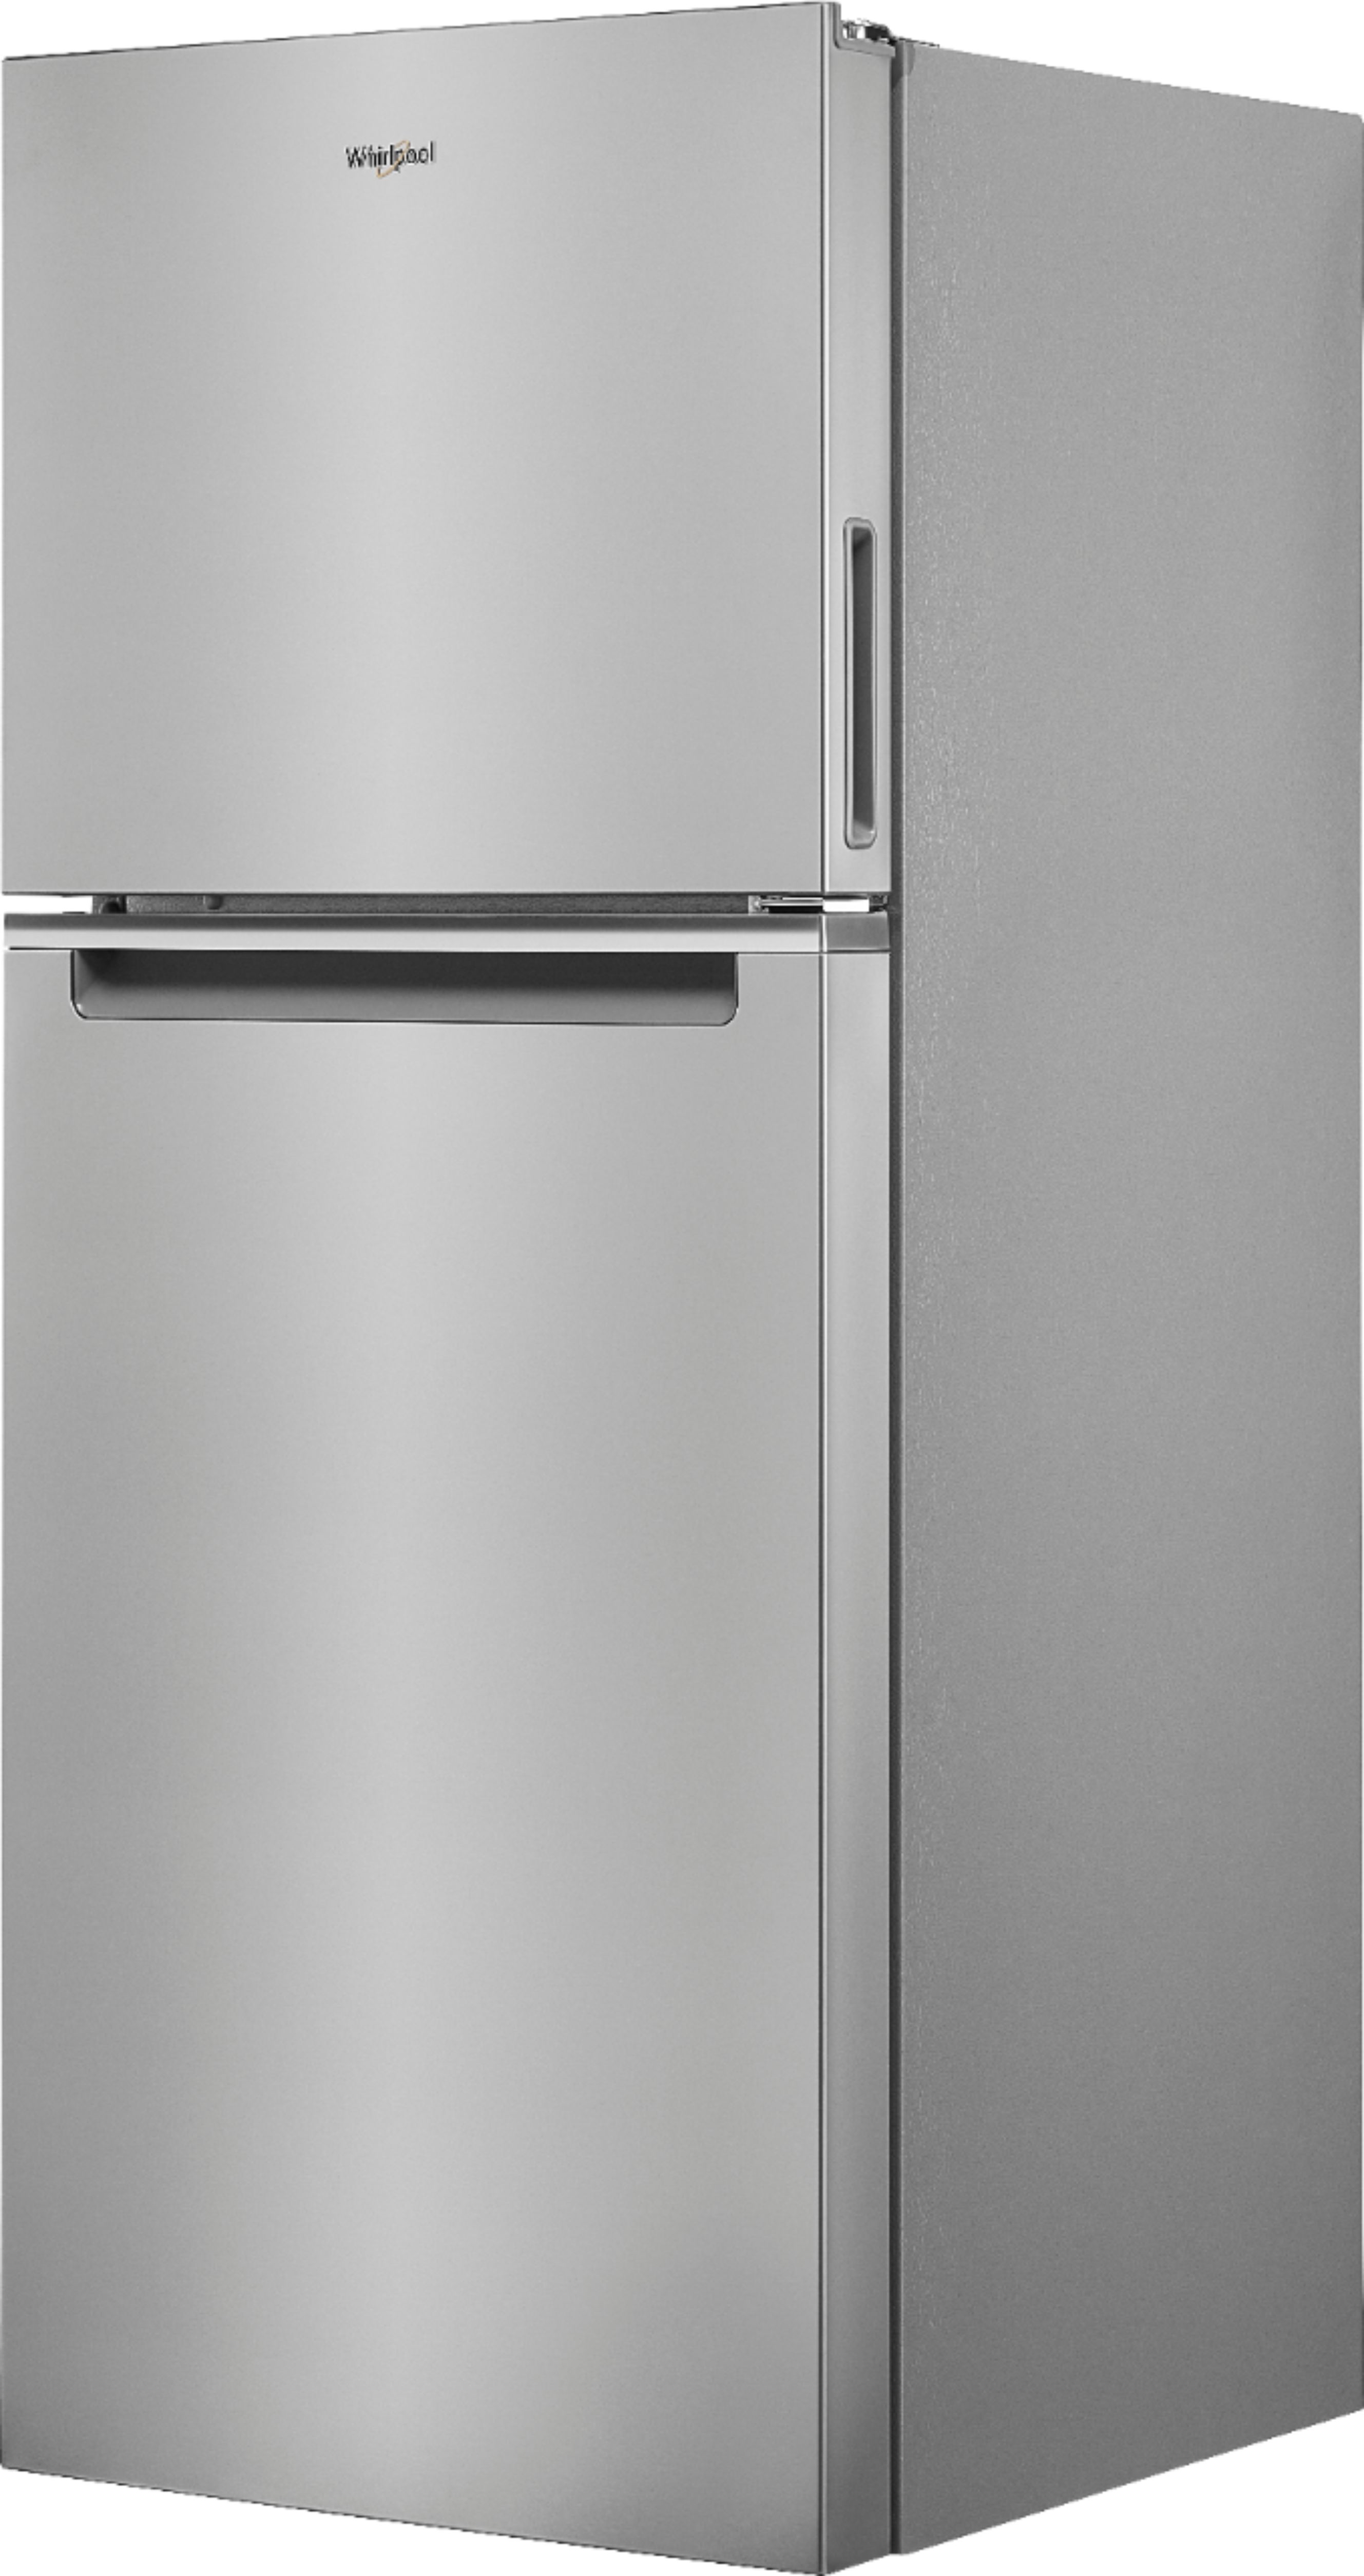 Left View: Monogram - 23.1 Cu. Ft. French Door Counter-Depth Refrigerator - Stainless steel